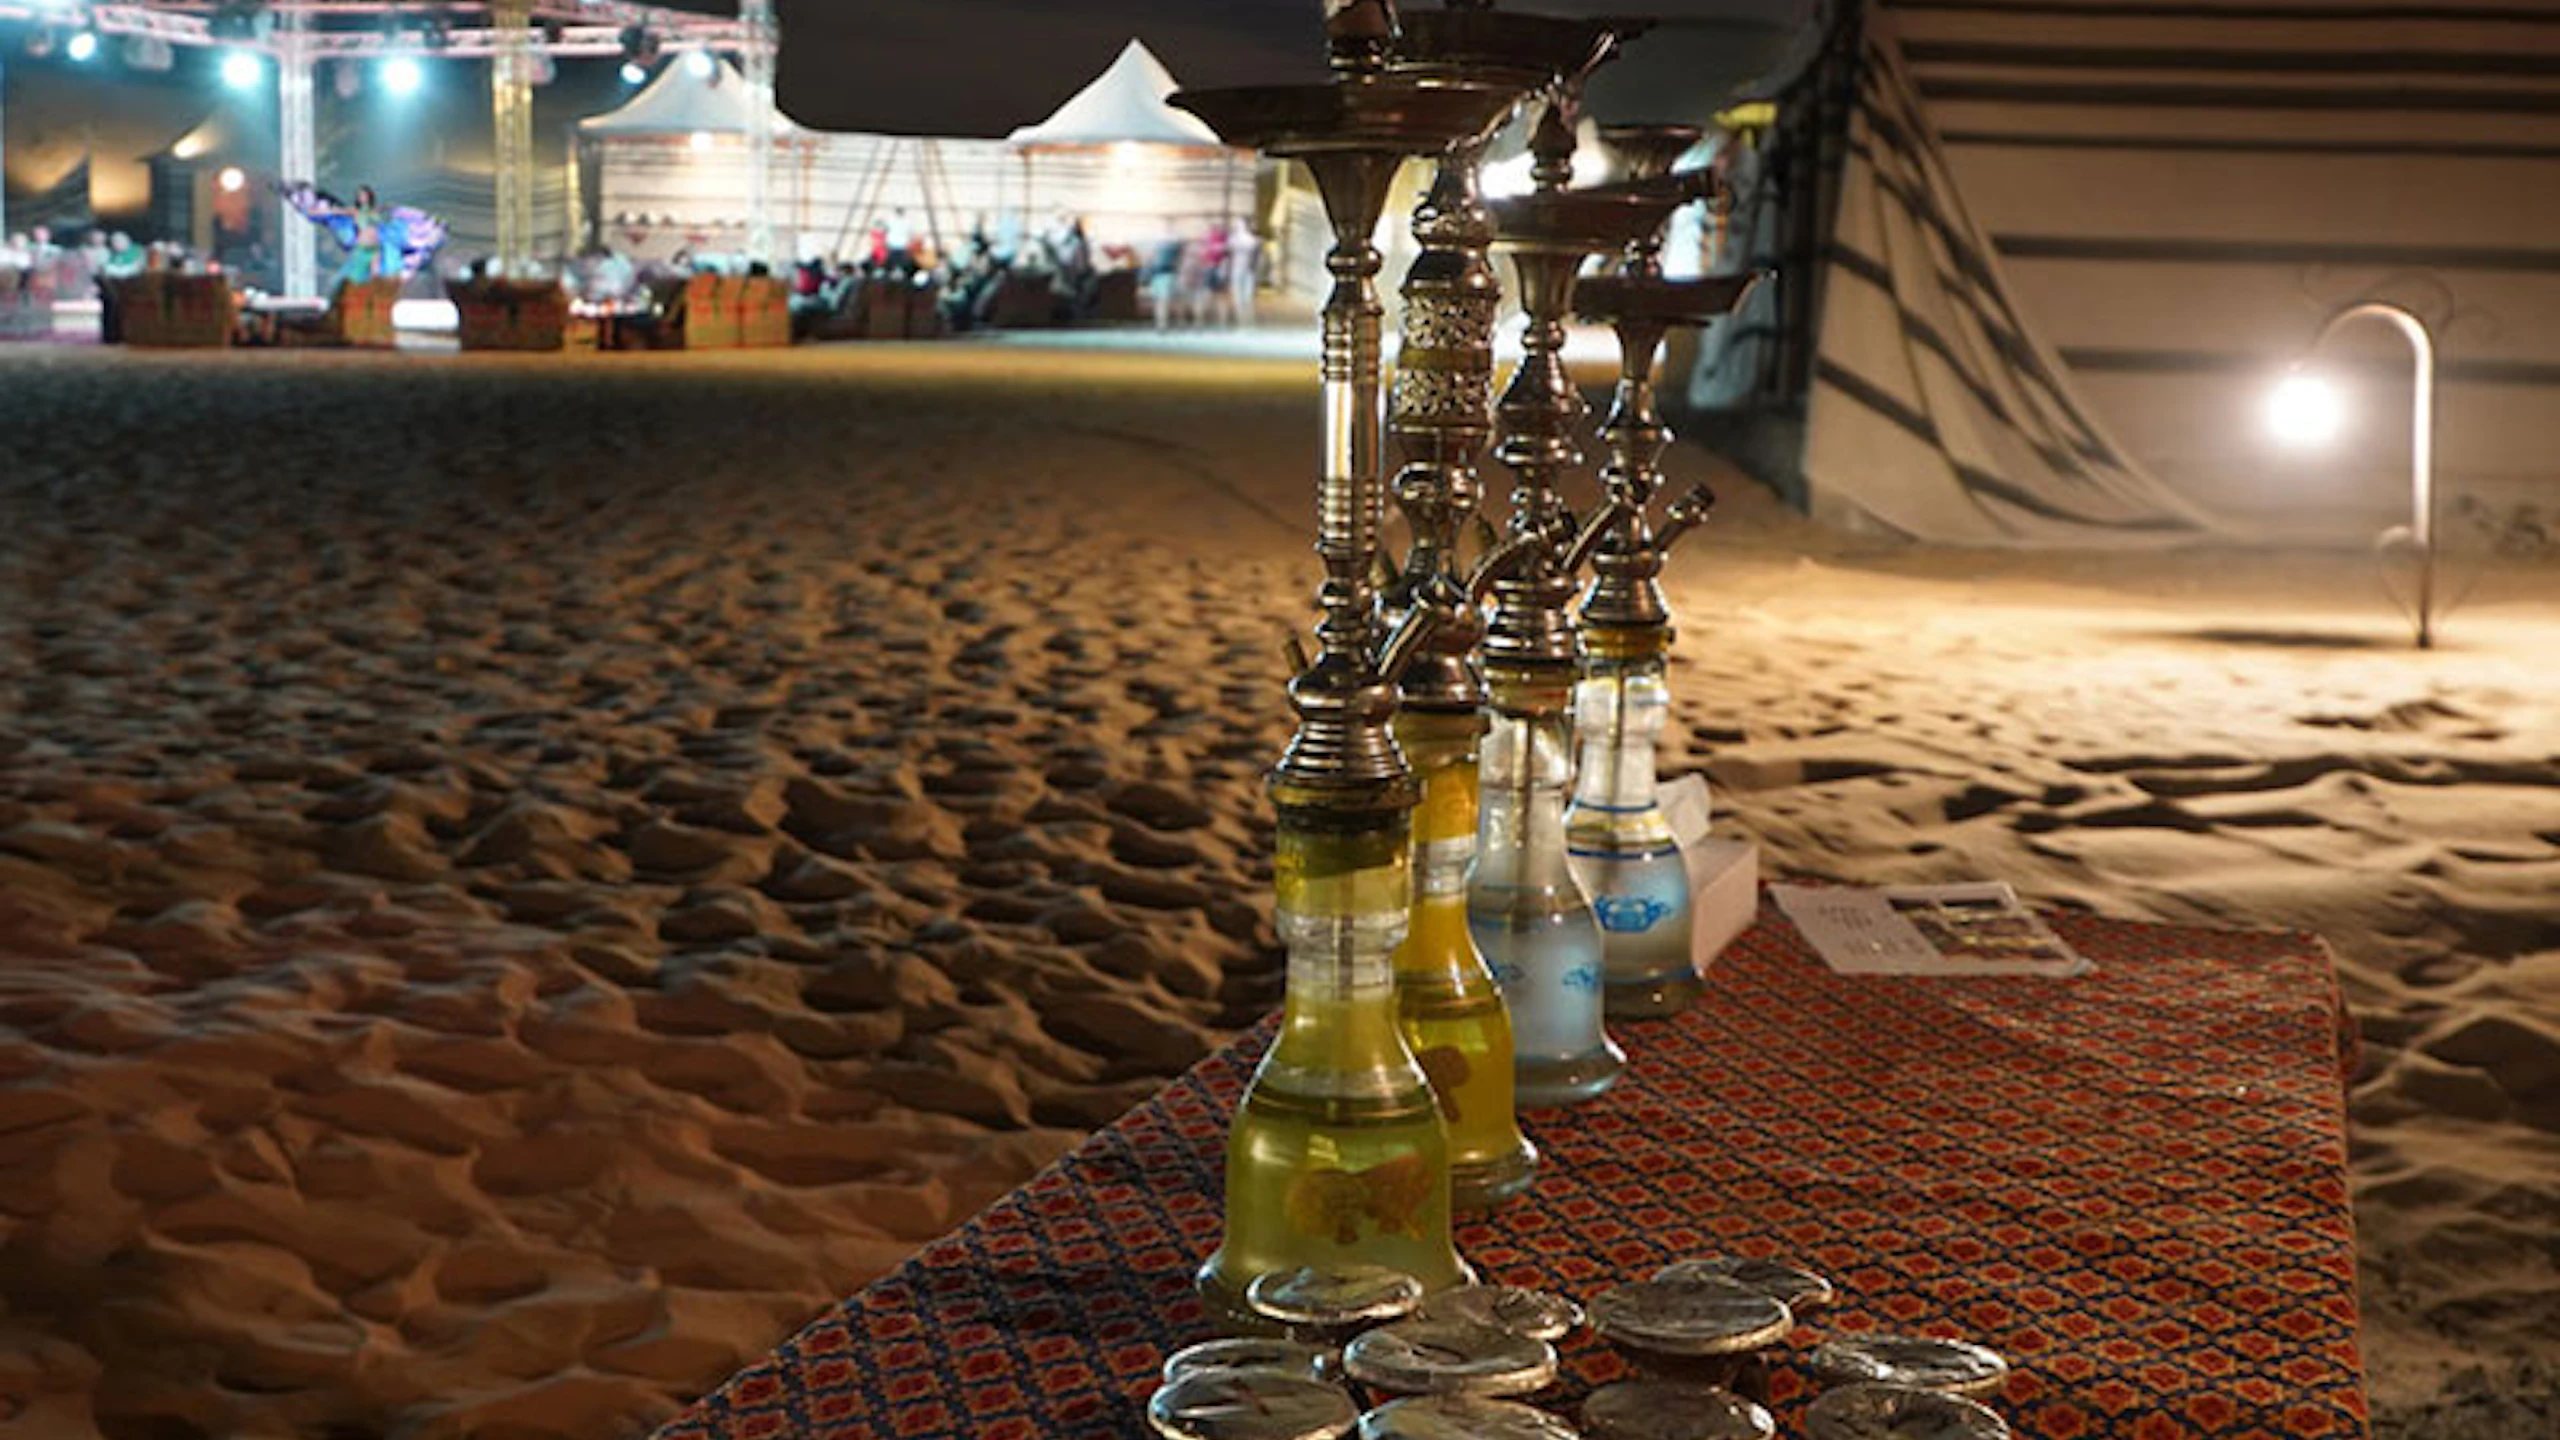 Caravanserai Bedouin Safari & Desert Dinner Experience Review